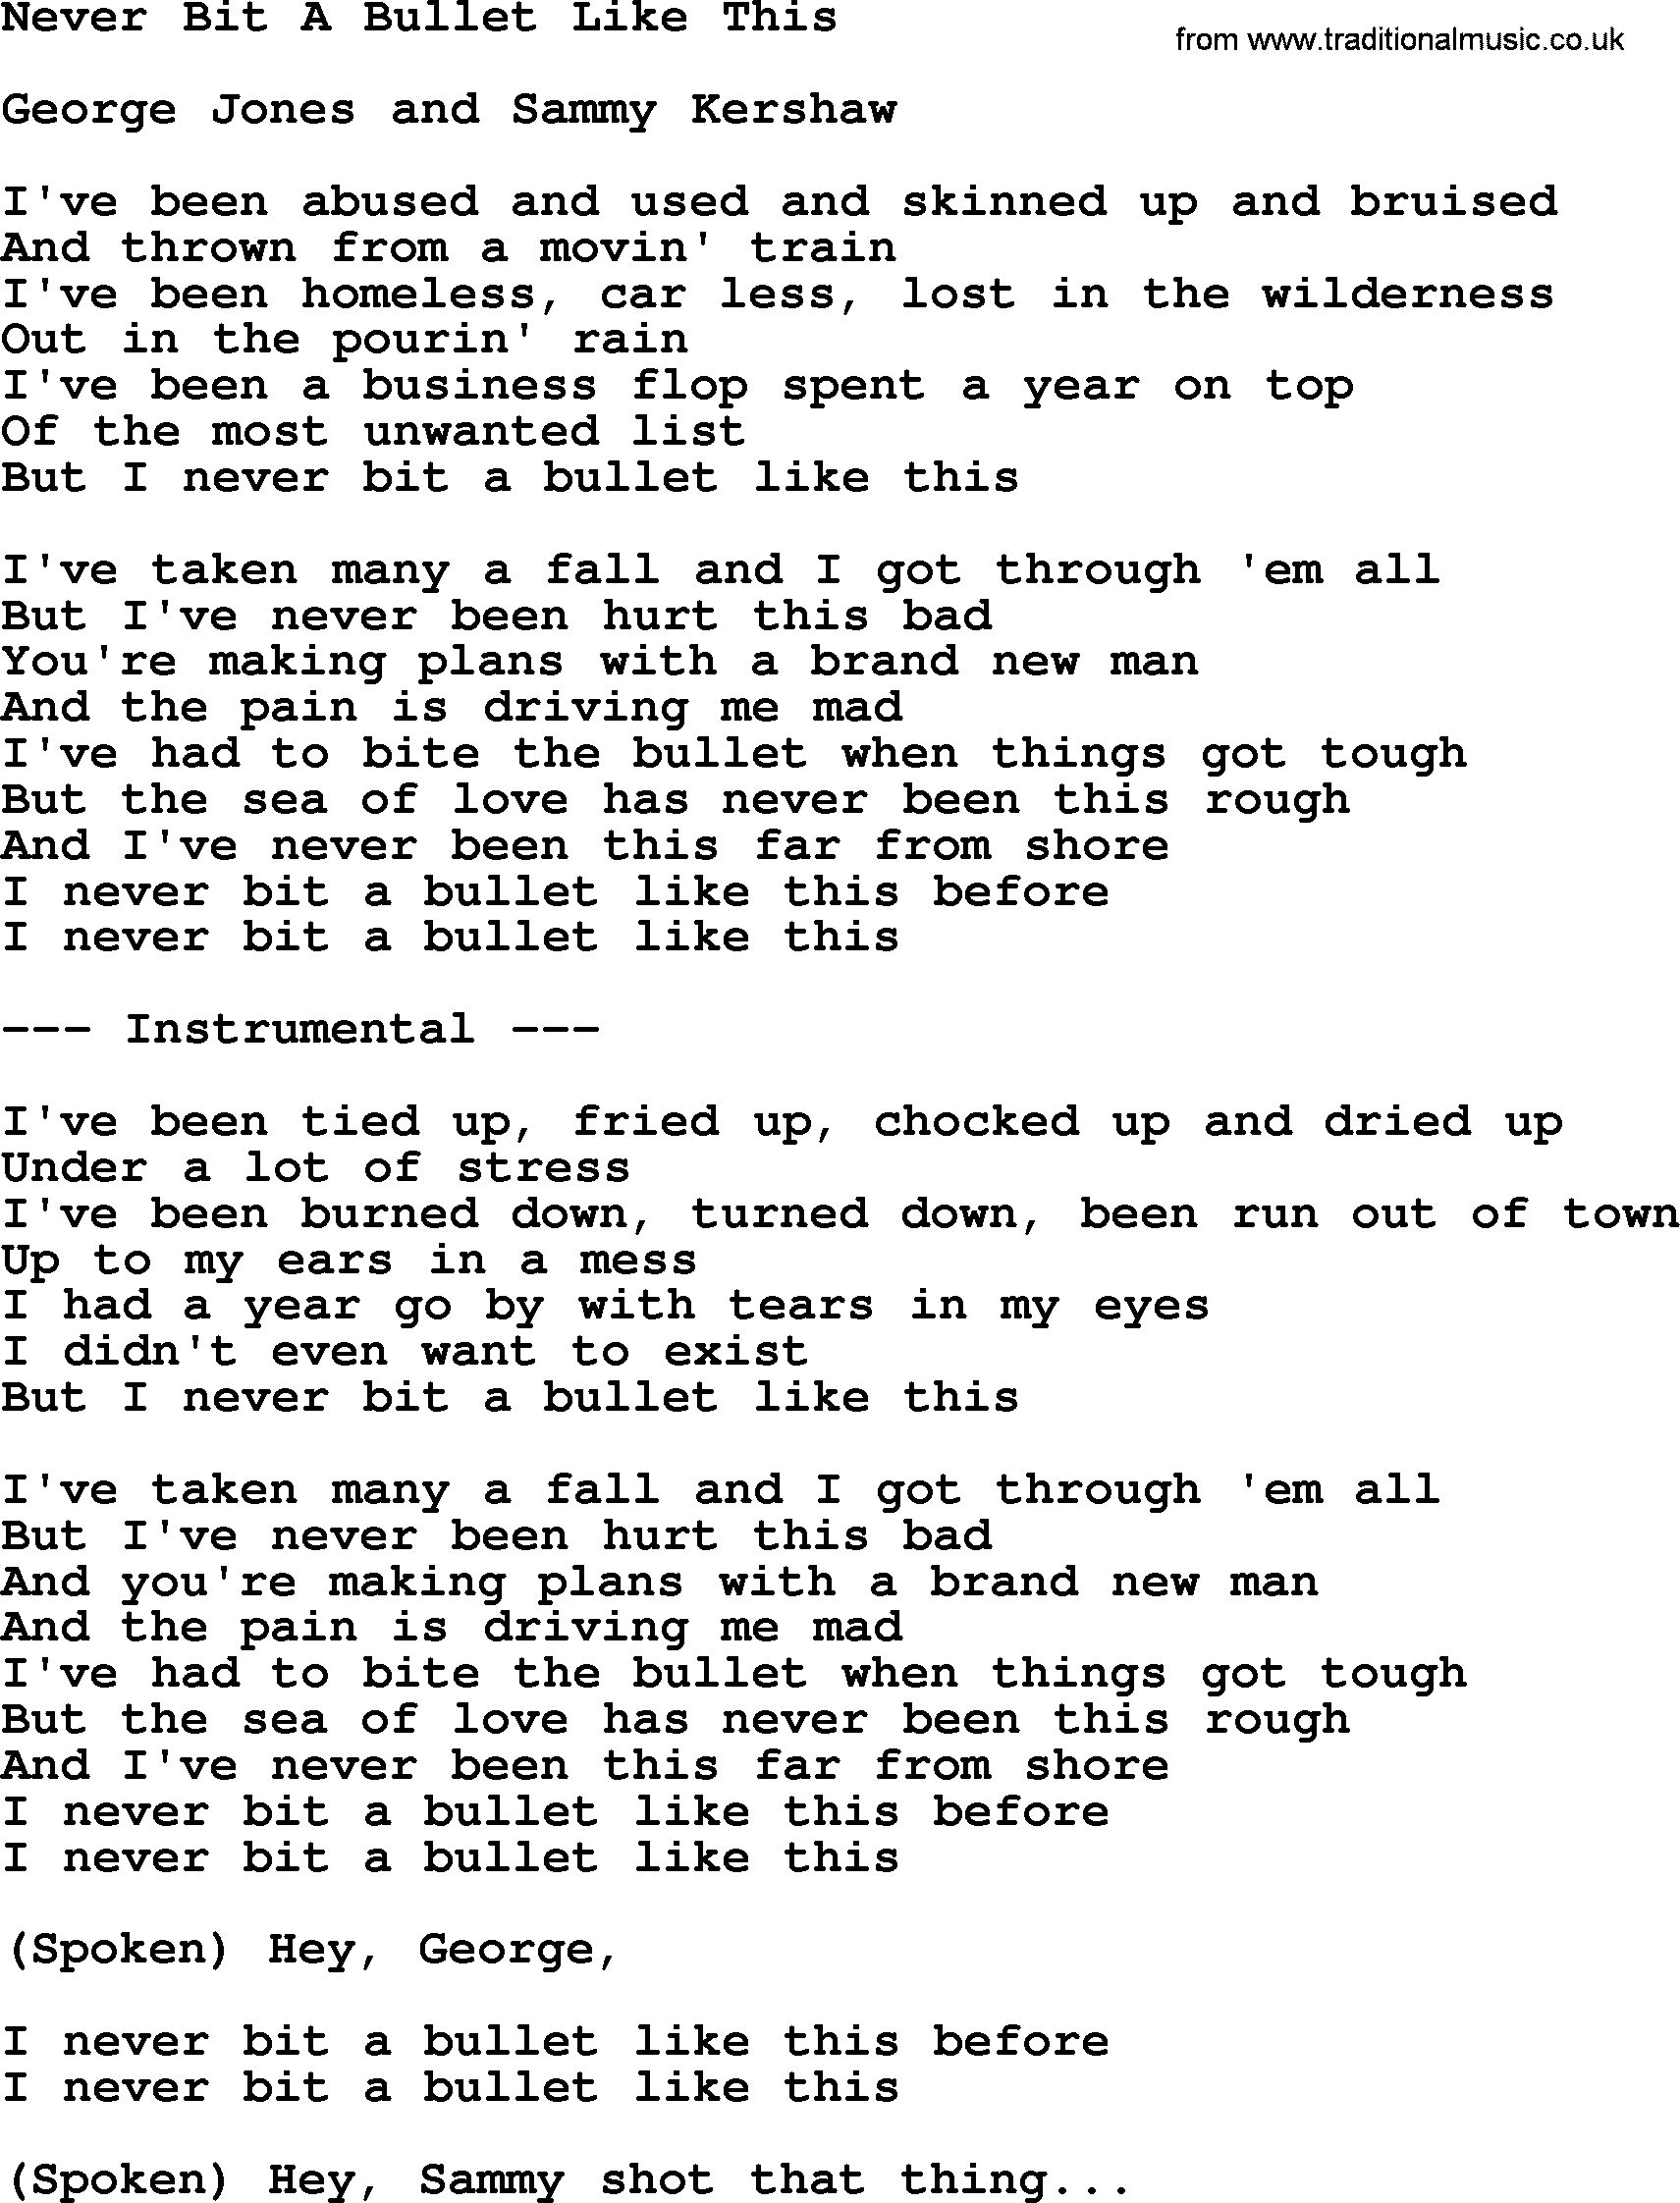 George Jones song: Never Bit A Bullet Like This, lyrics